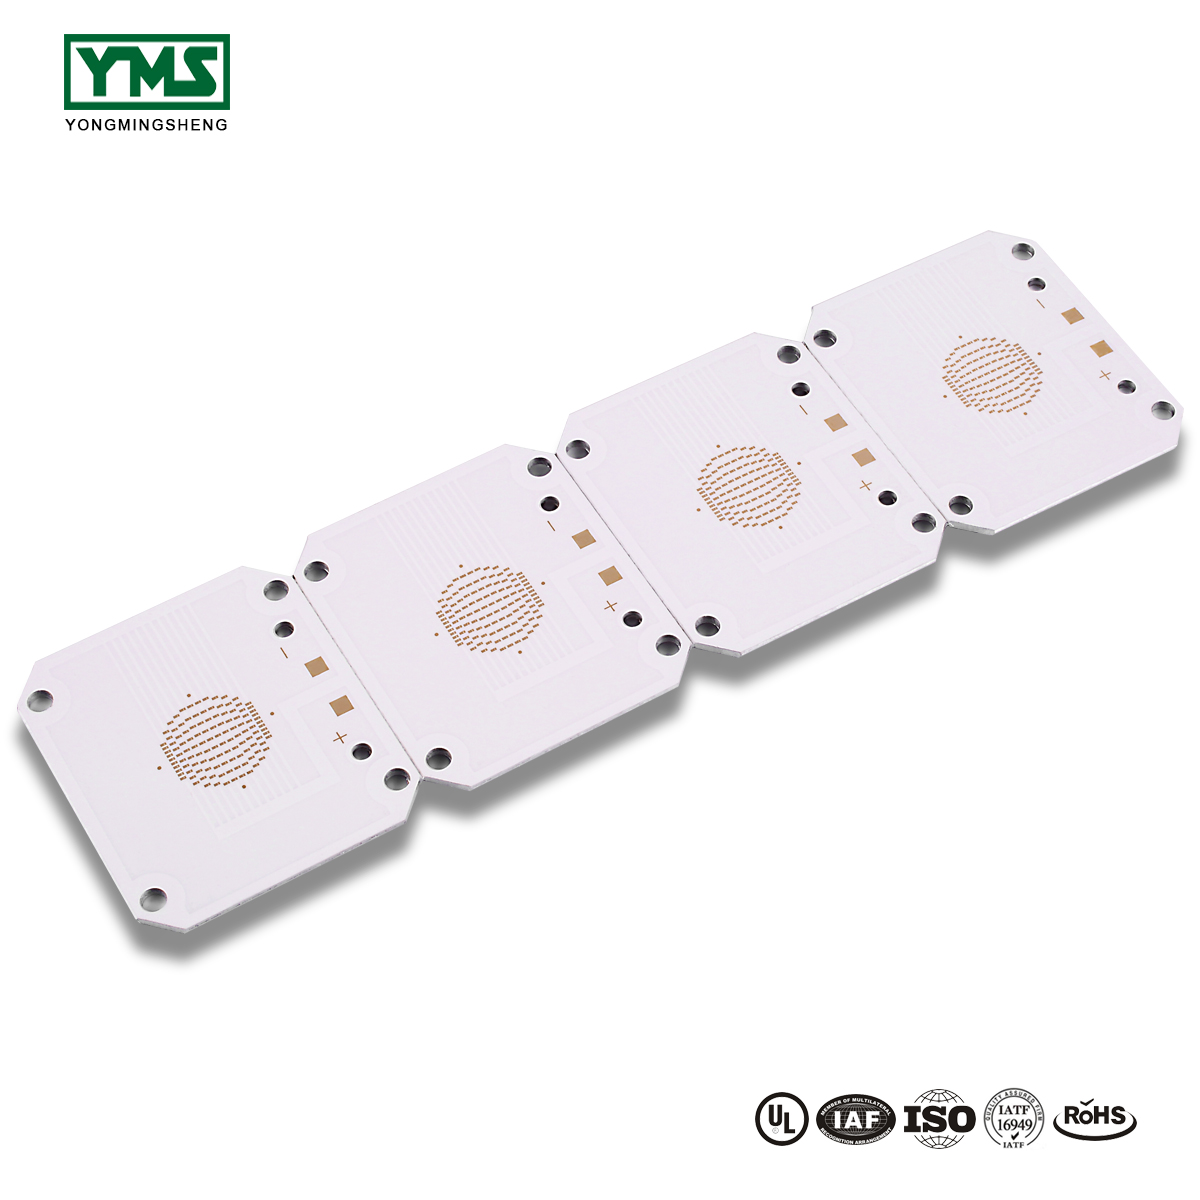 Wholesale Price 2layer Pcb - 1Layer Aluminum base Board | YMSPCB – Yongmingsheng